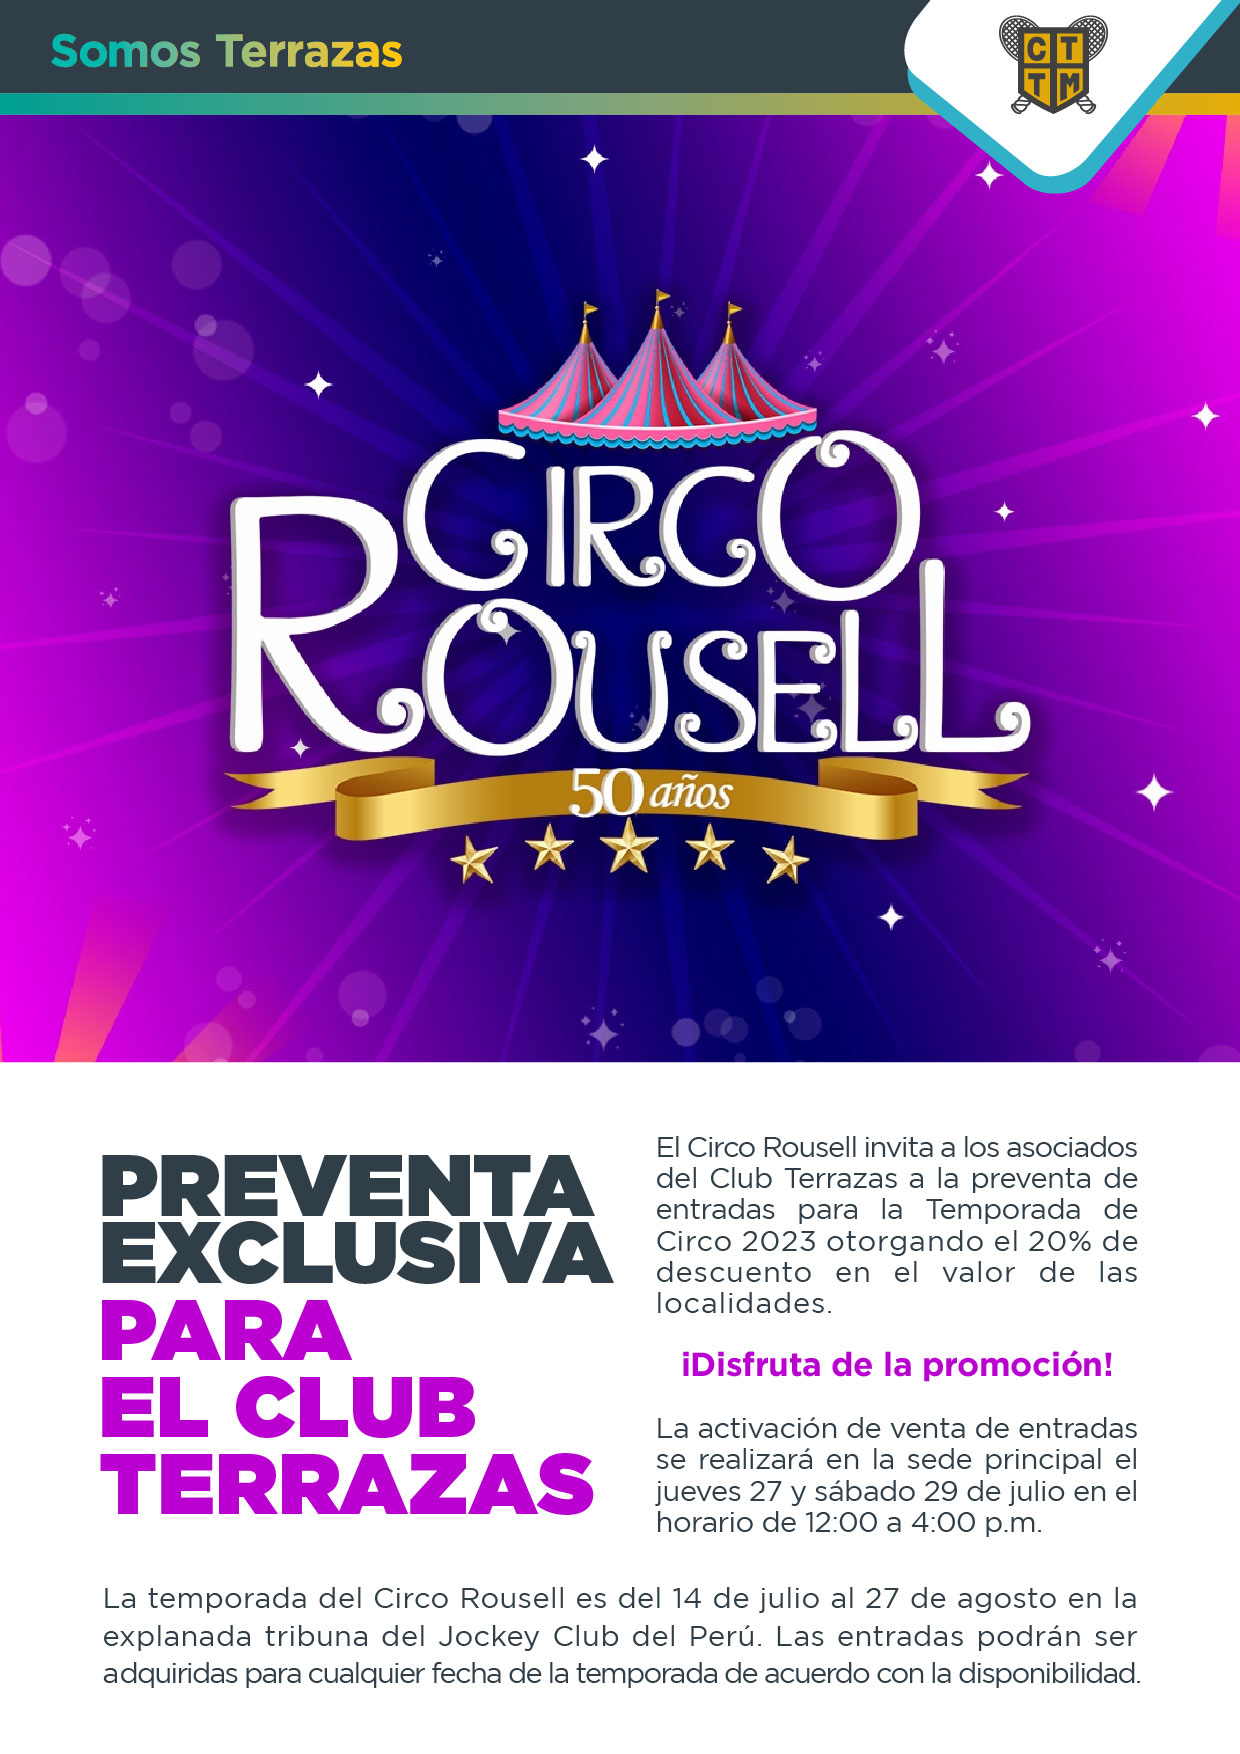 PREVENTA EXCLUSIVA PARA EL CLUB TERRAZAS - CIRCO ROUSELL